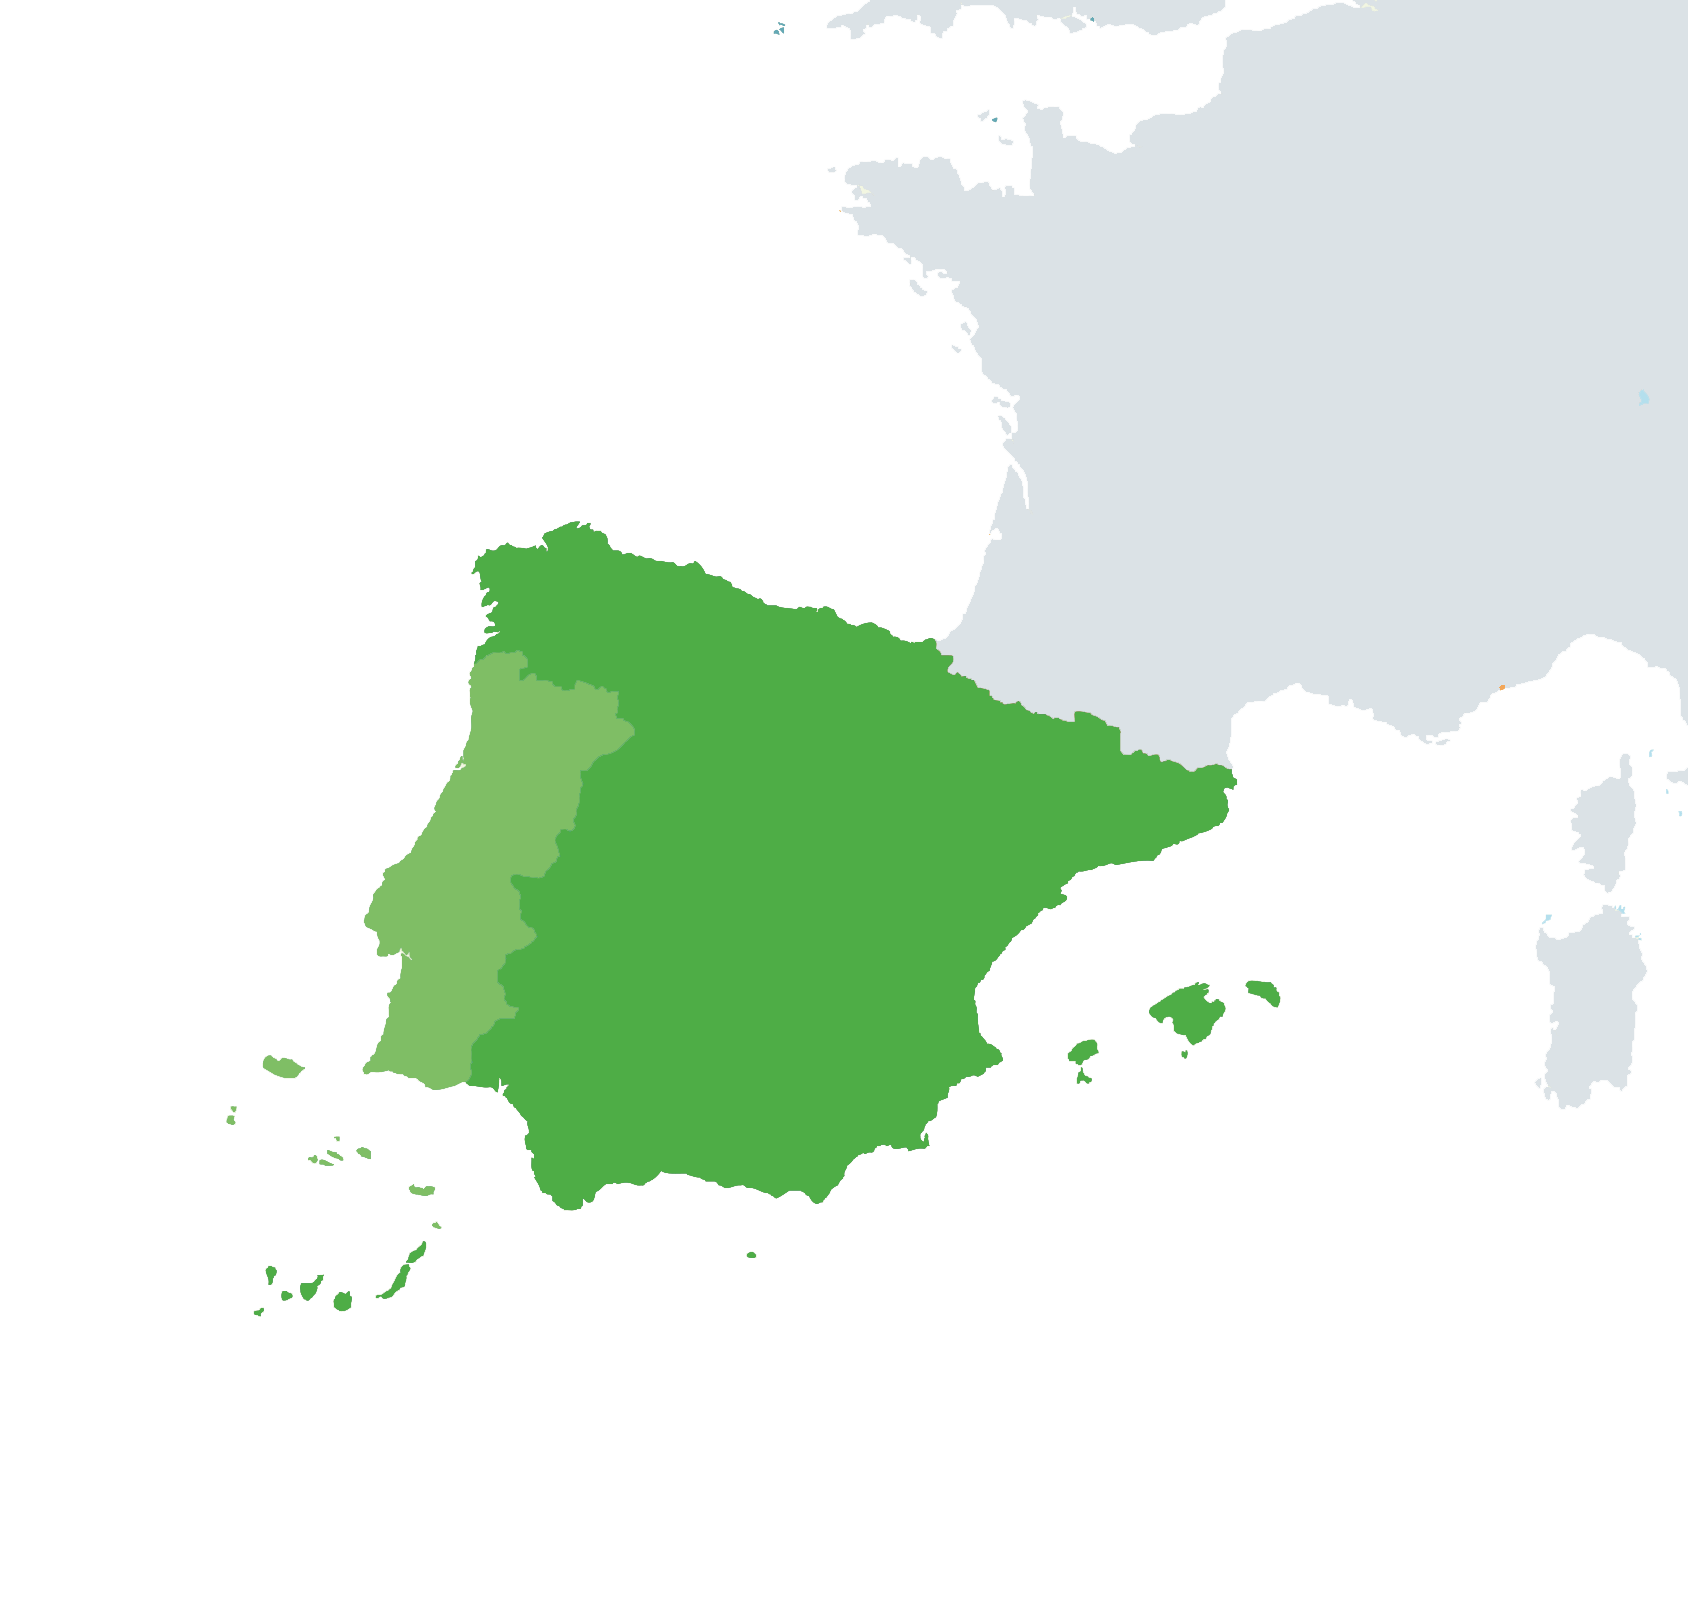 Spain_Portugal_Map